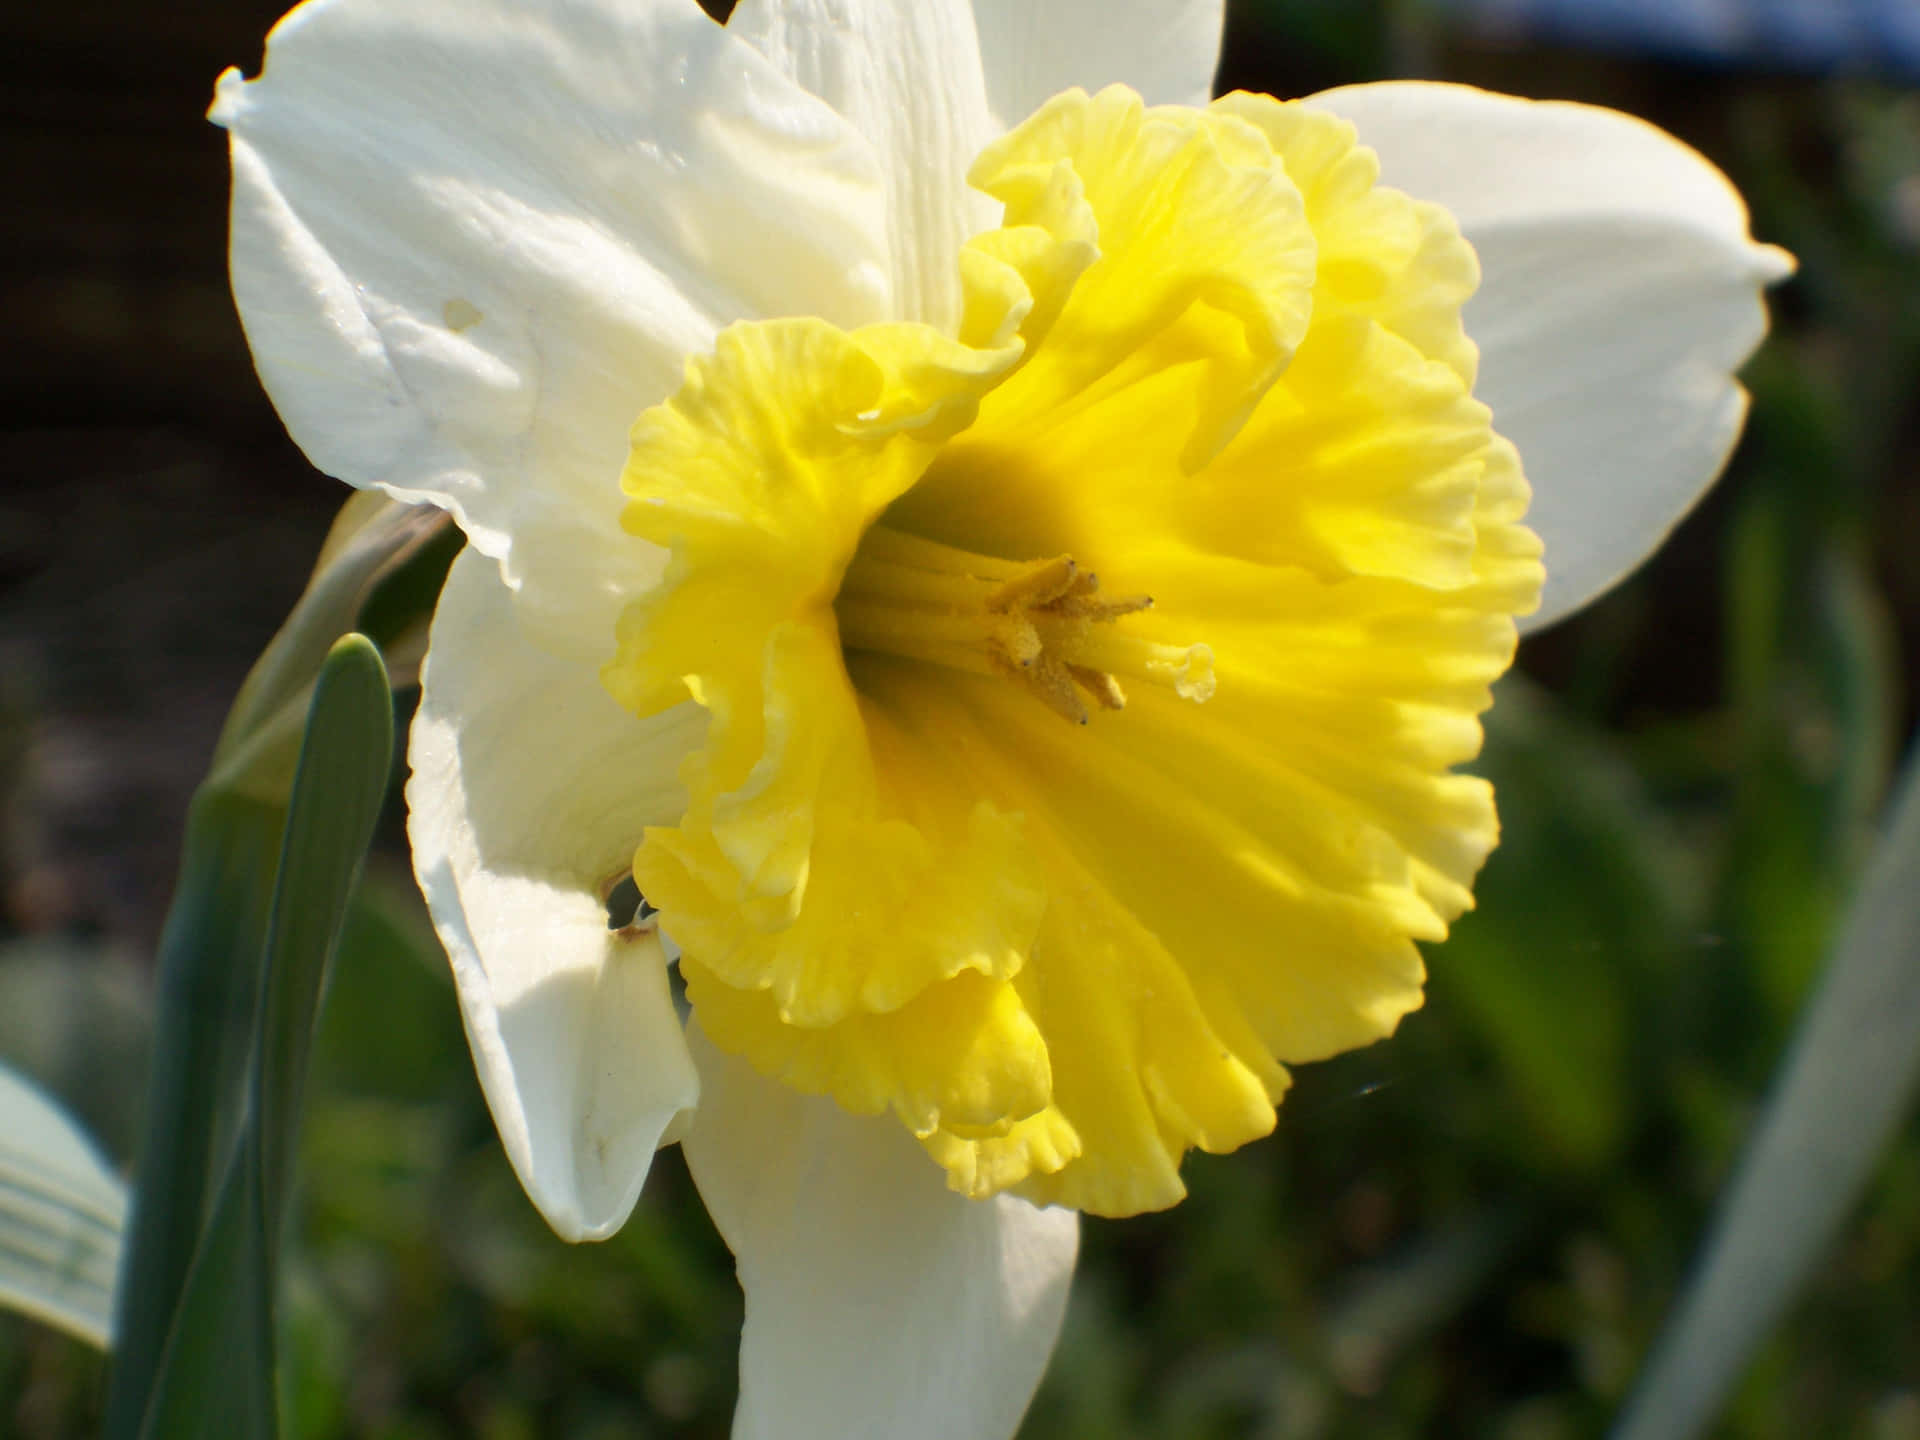 A Vibrant Daffodil in Full Bloom